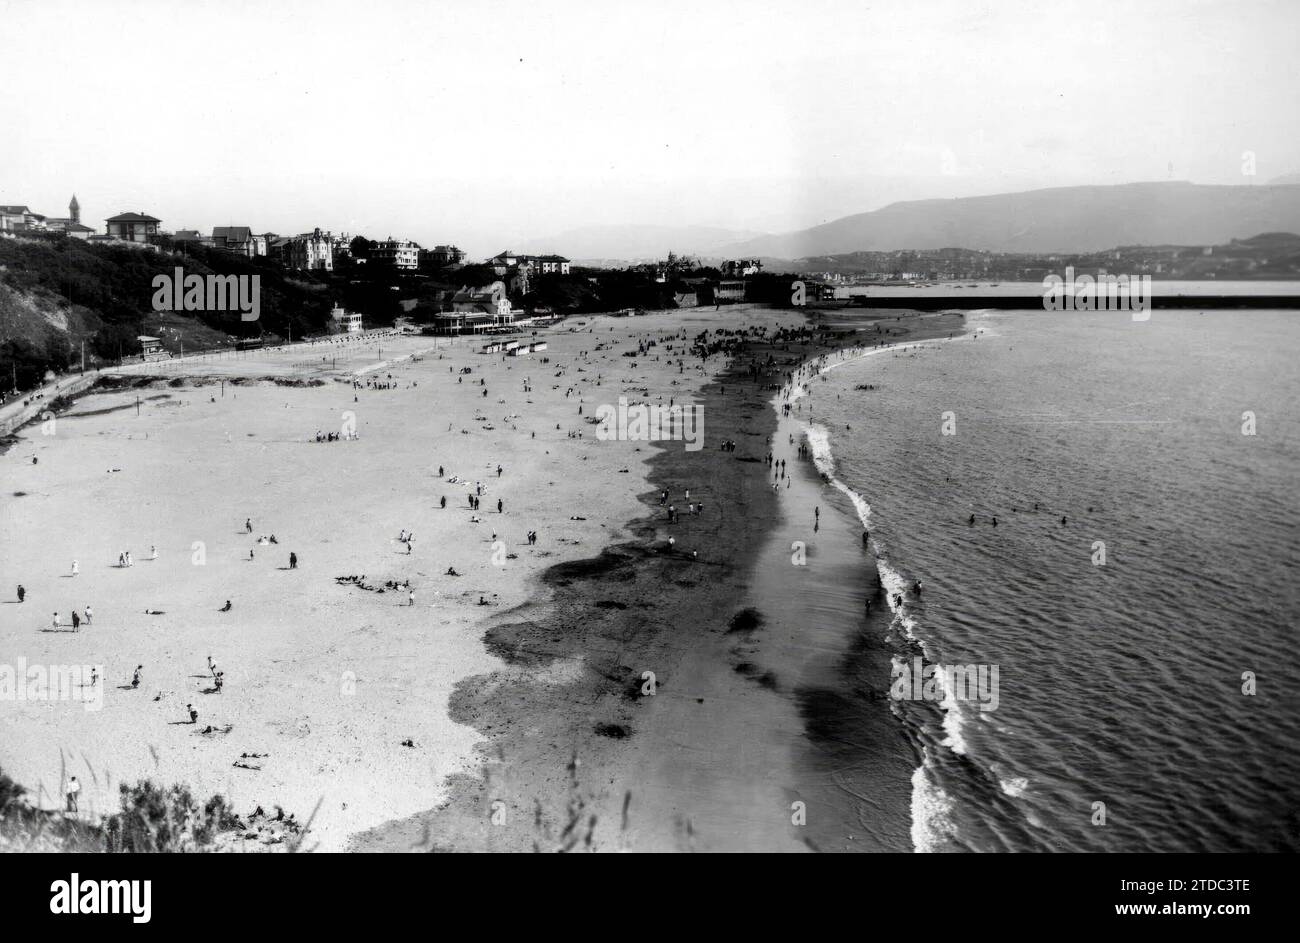 07/31/1935. General view of Ereaga beach in the town Algorta (Vizcaya). Credit: Album / Archivo ABC / Amado Stock Photo